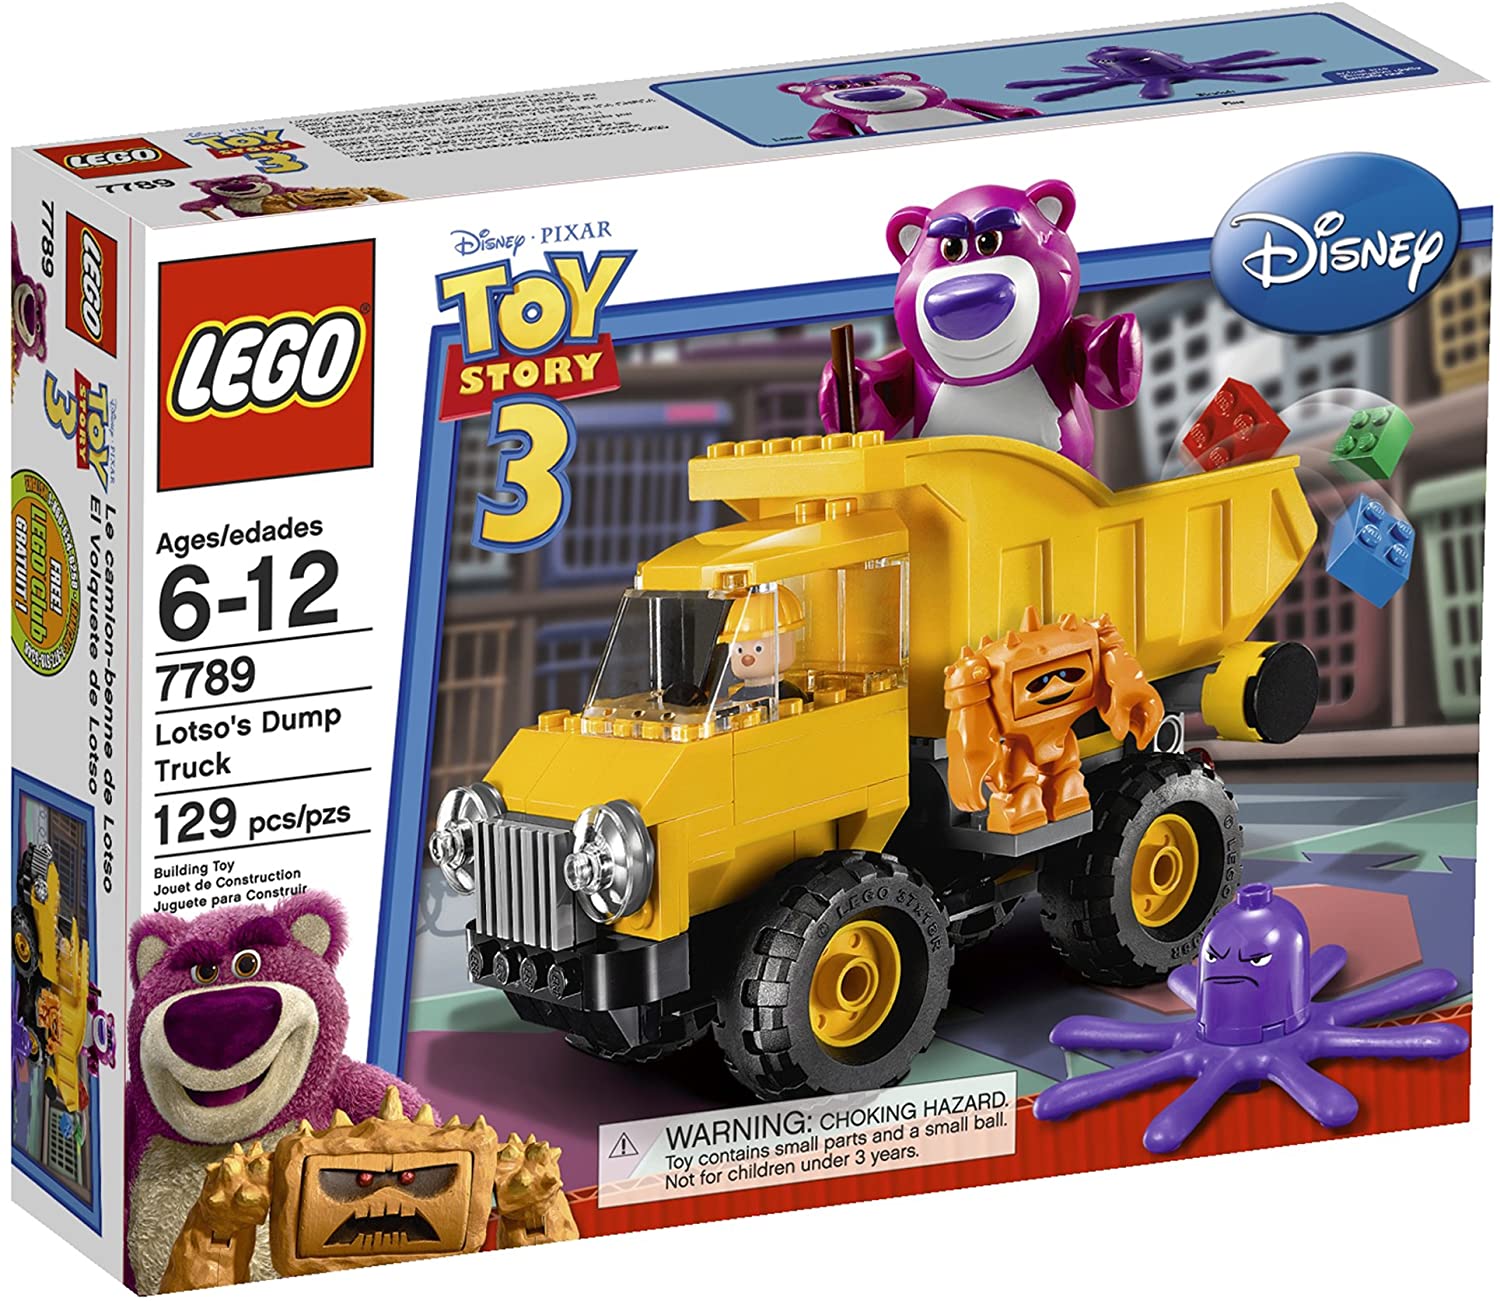 Toy Story Lotso's Dump Truck (7789)